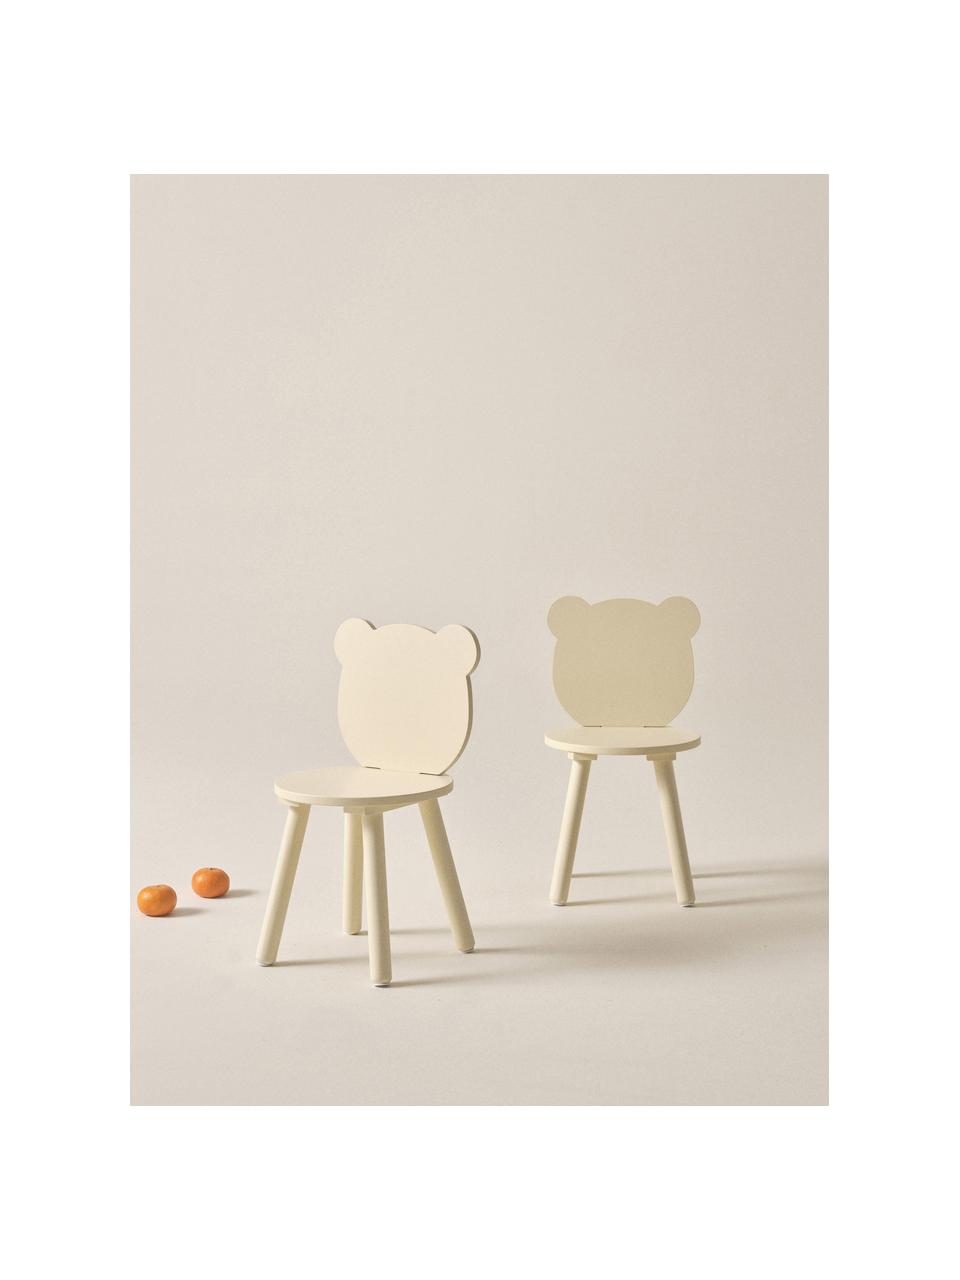 Holz-Kinderstühle Beary, 2 Stück, Kiefernholz, Mitteldichte Holzfaserplatte (MDF), lackiert, Hellgelb, B 30 x H 58 cm